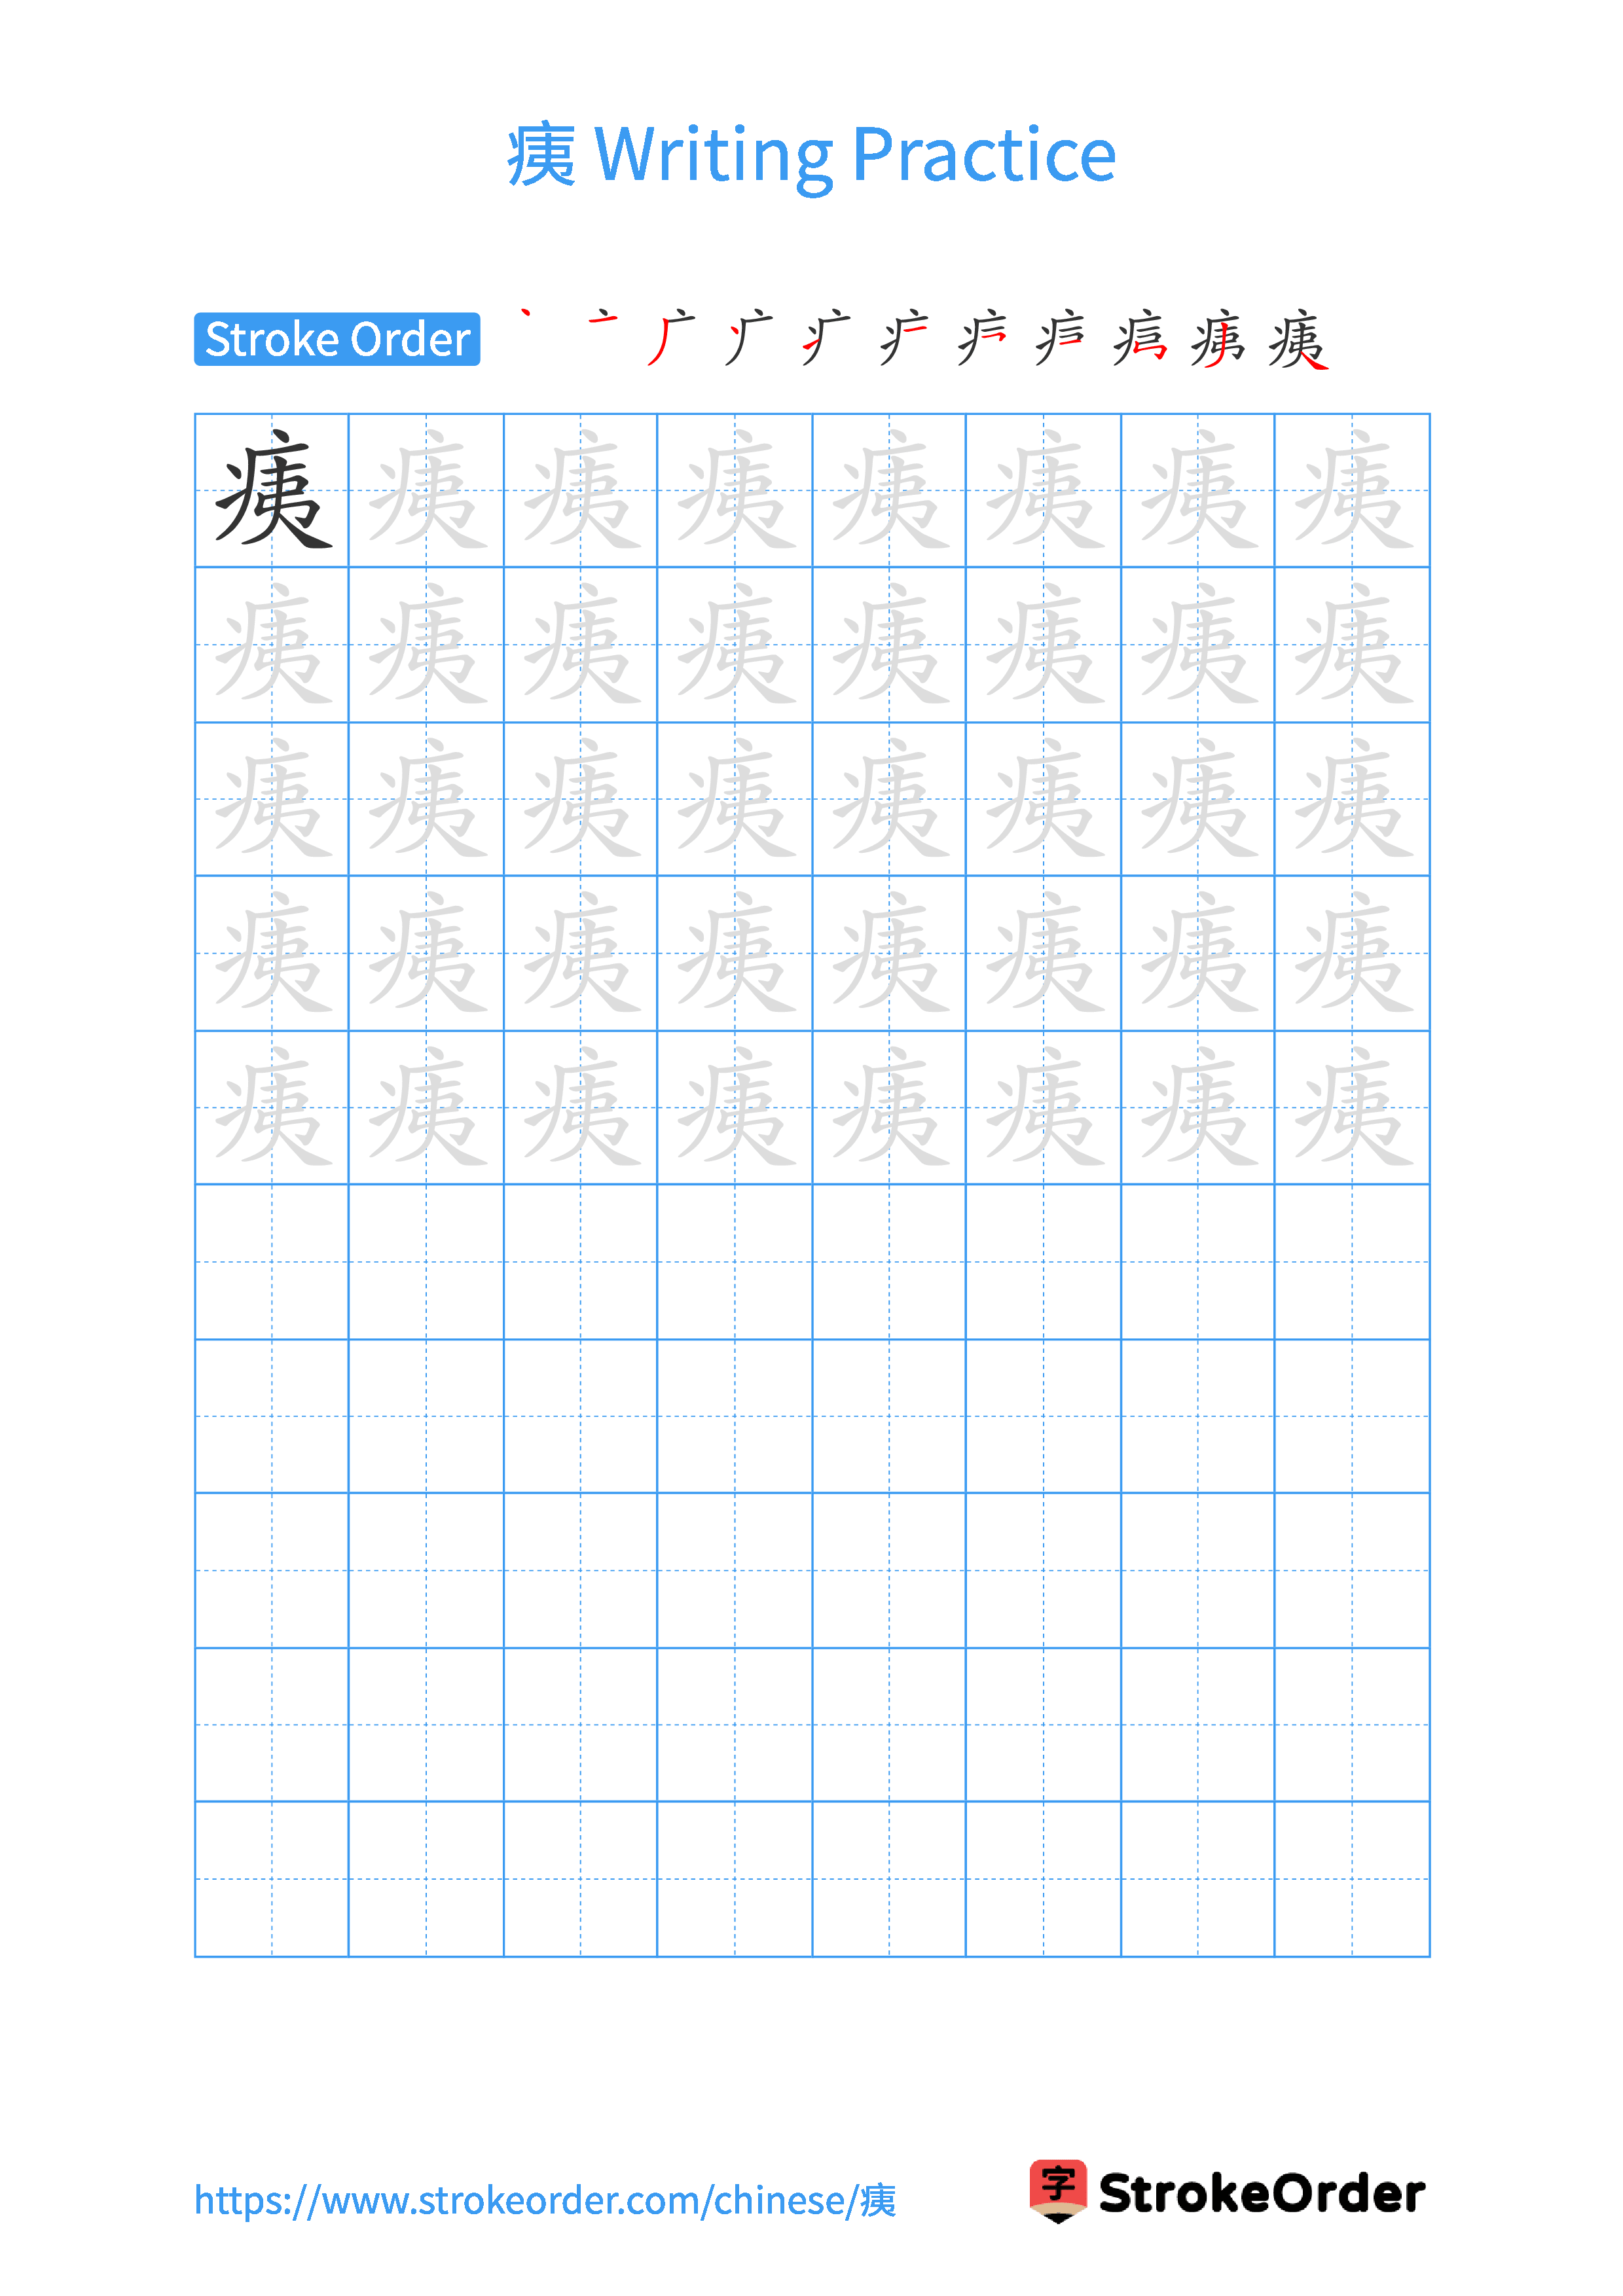 Printable Handwriting Practice Worksheet of the Chinese character 痍 in Portrait Orientation (Tian Zi Ge)